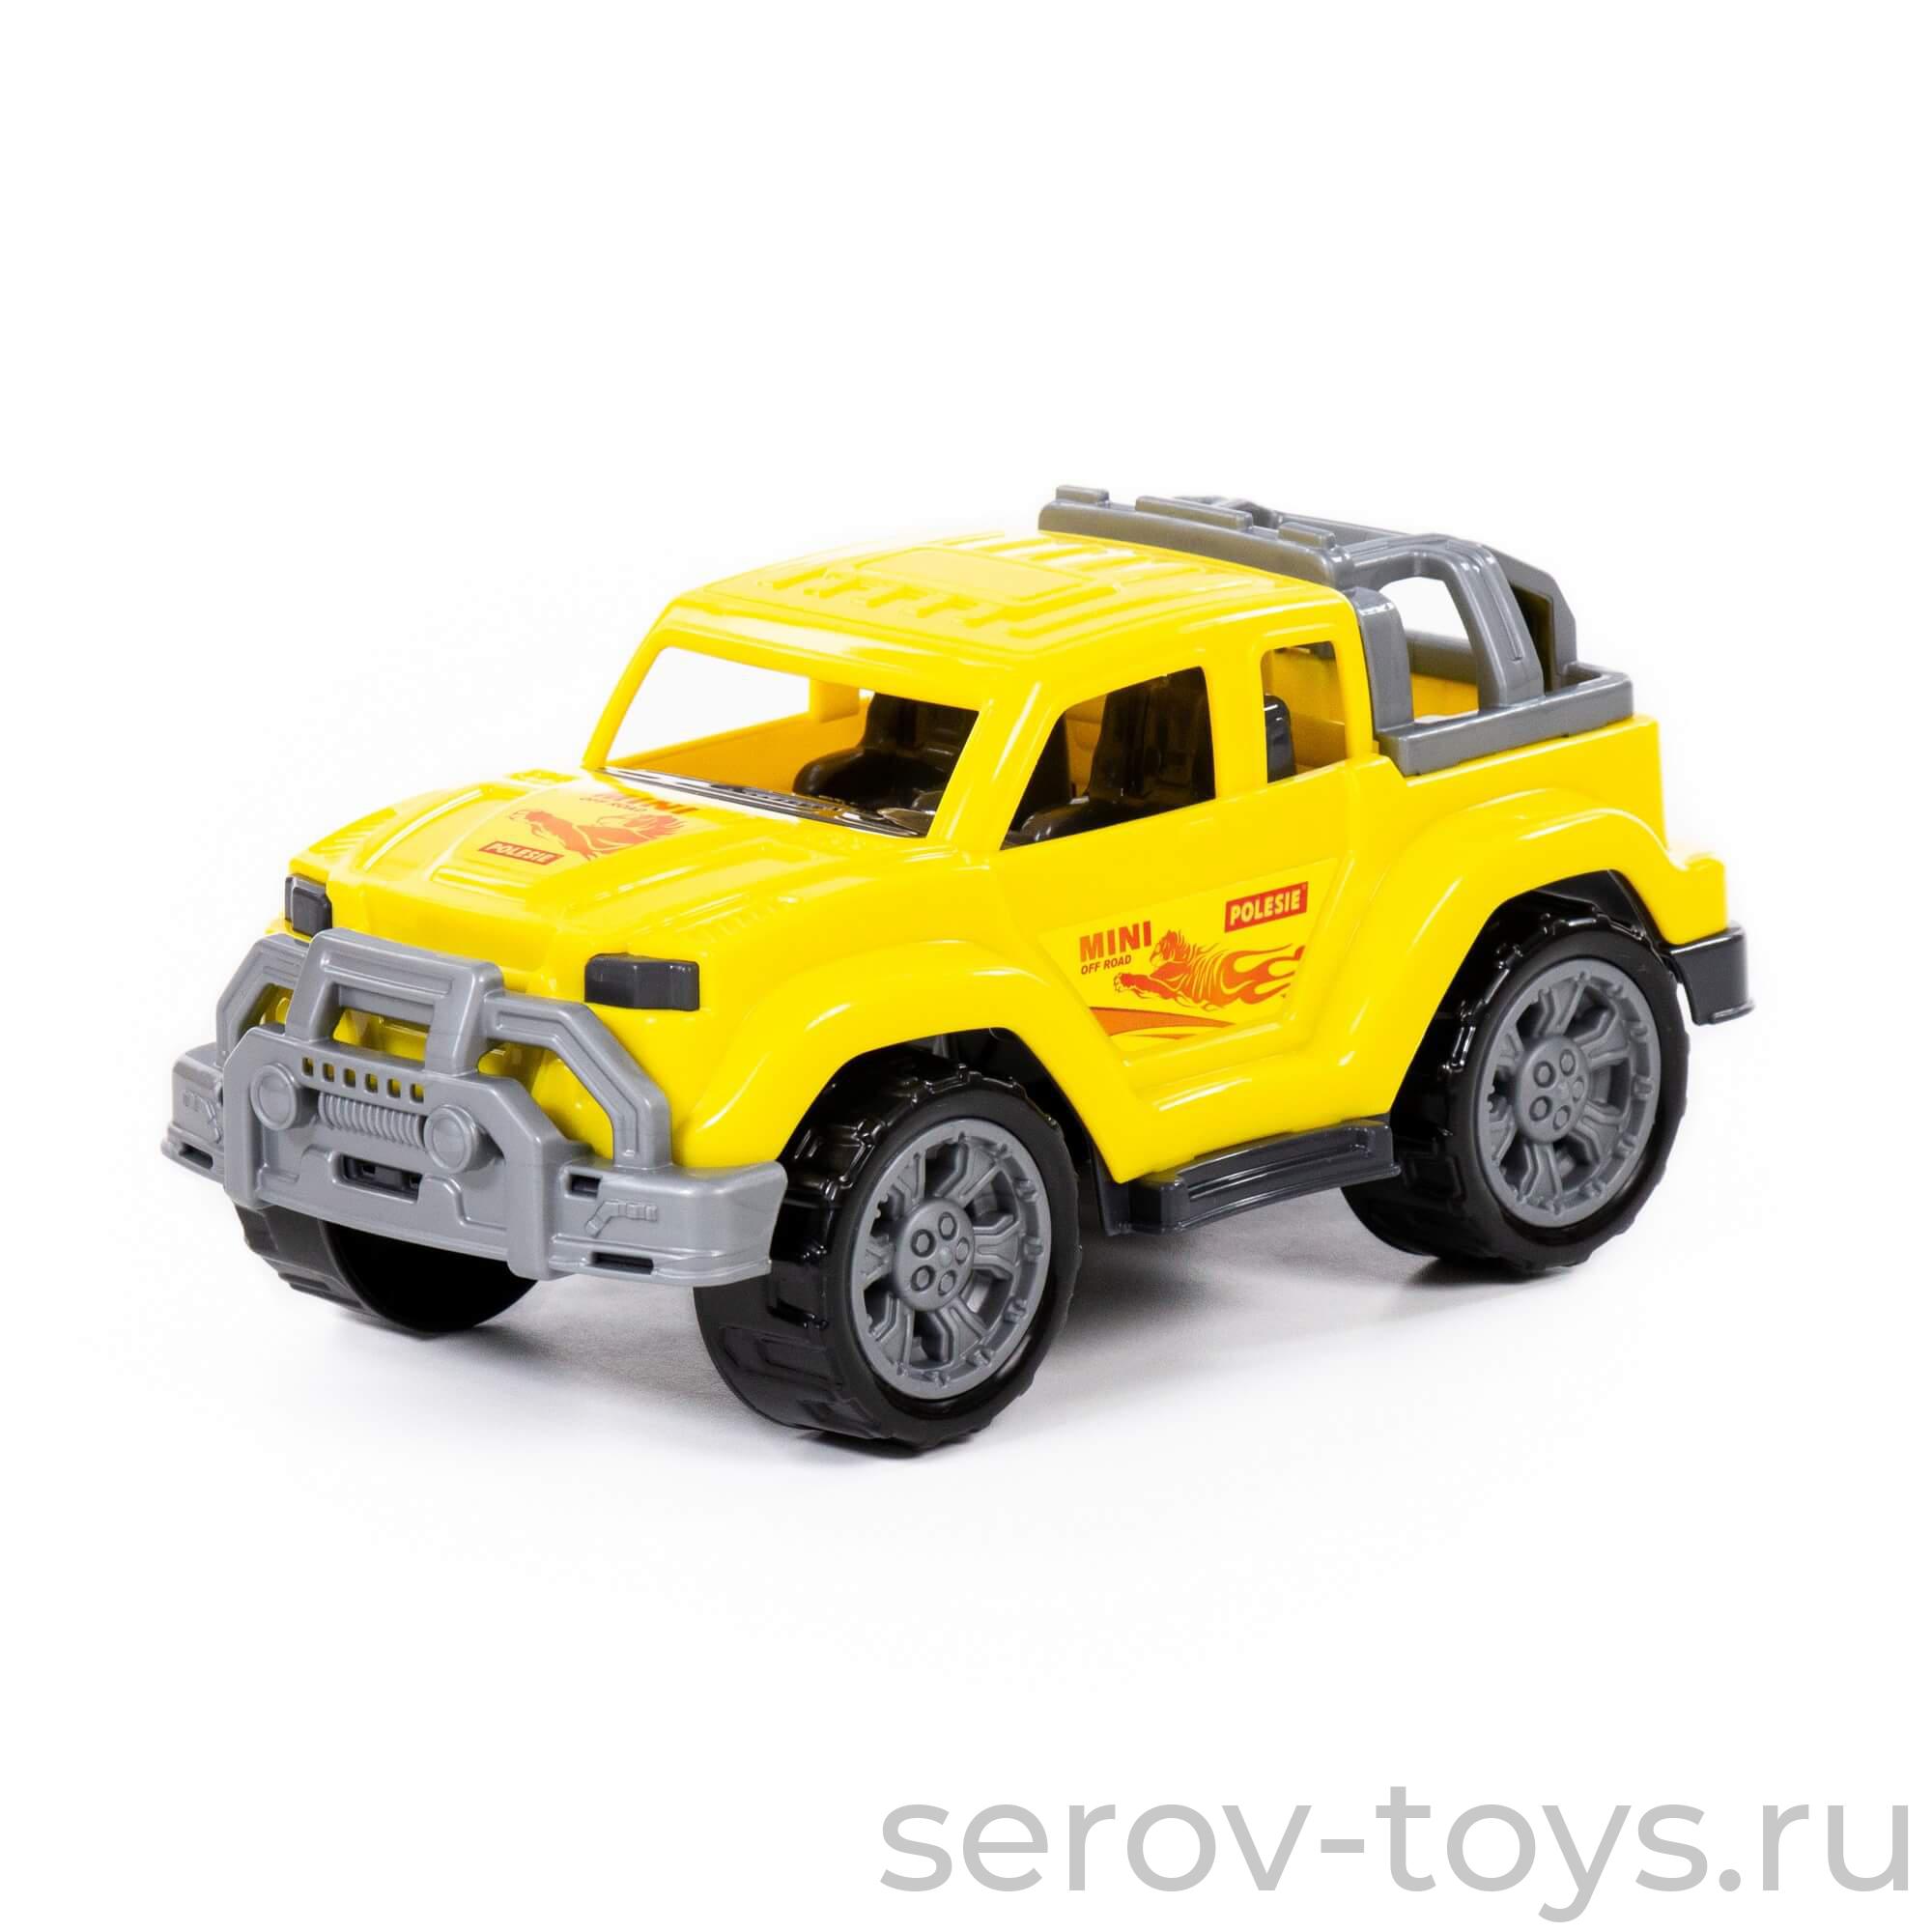 Автомобиль Легионер мини 84668 Желтый в сетке